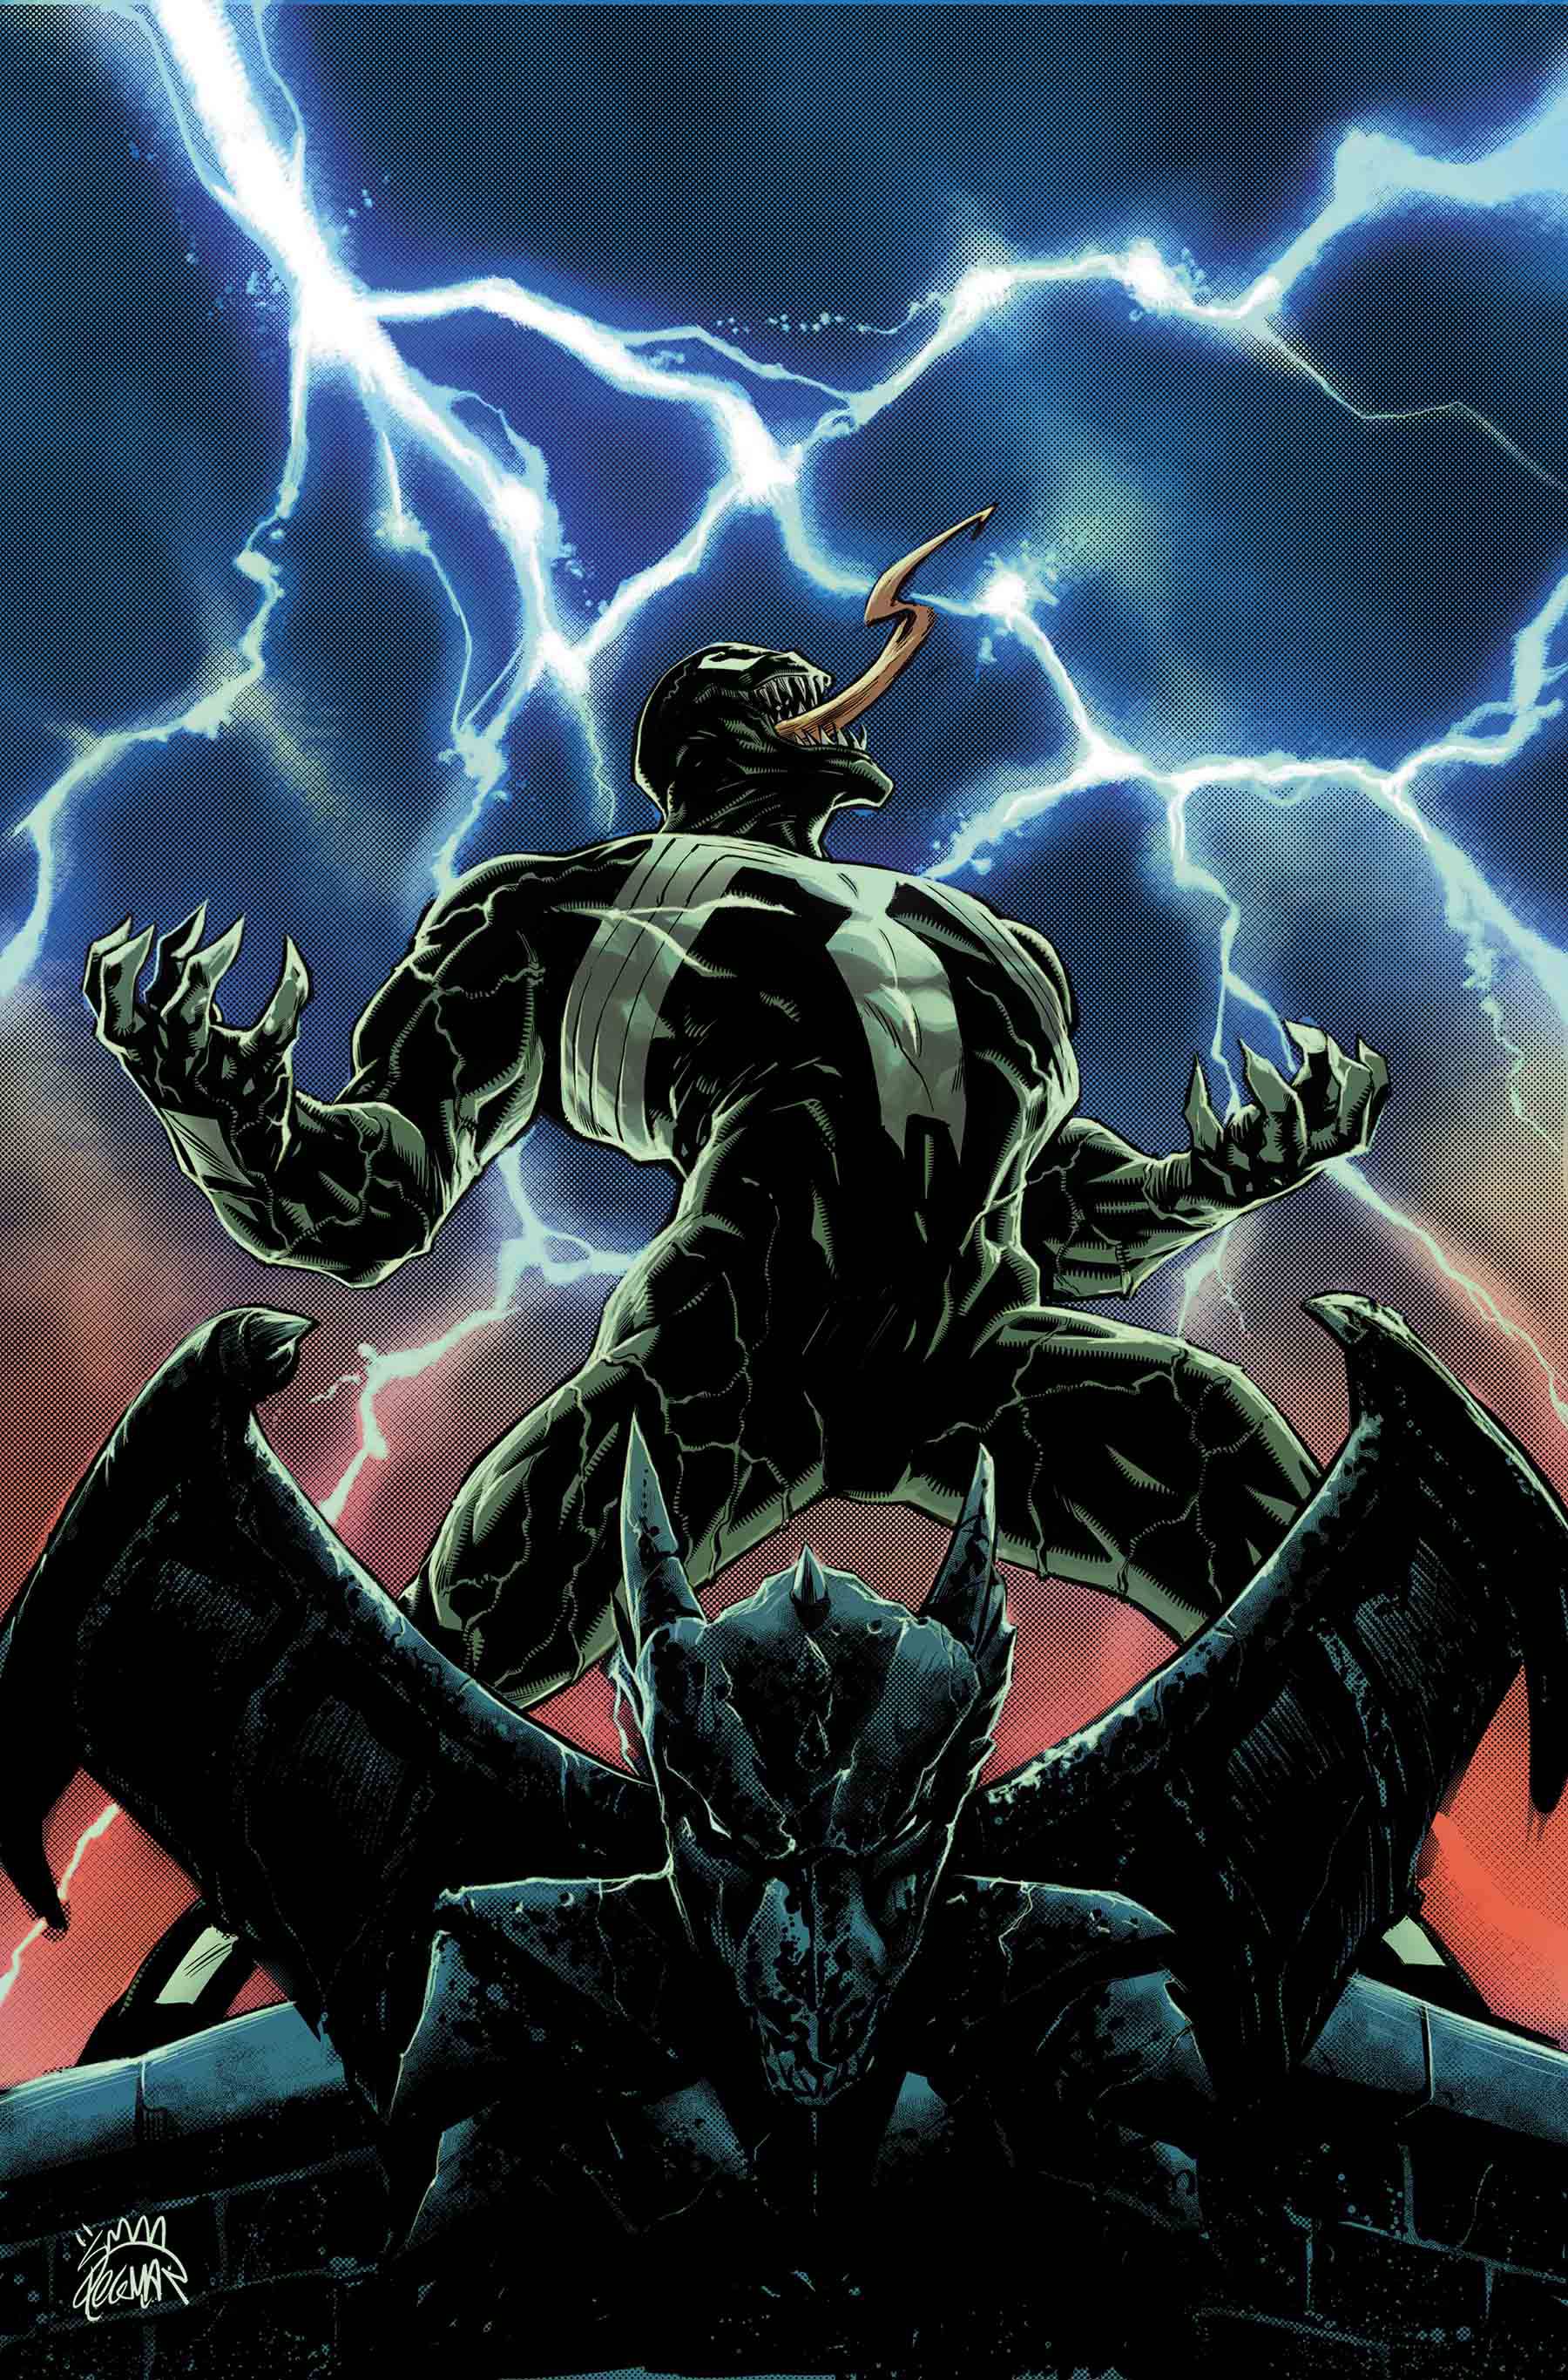 Venom #1 by Stegman Poster